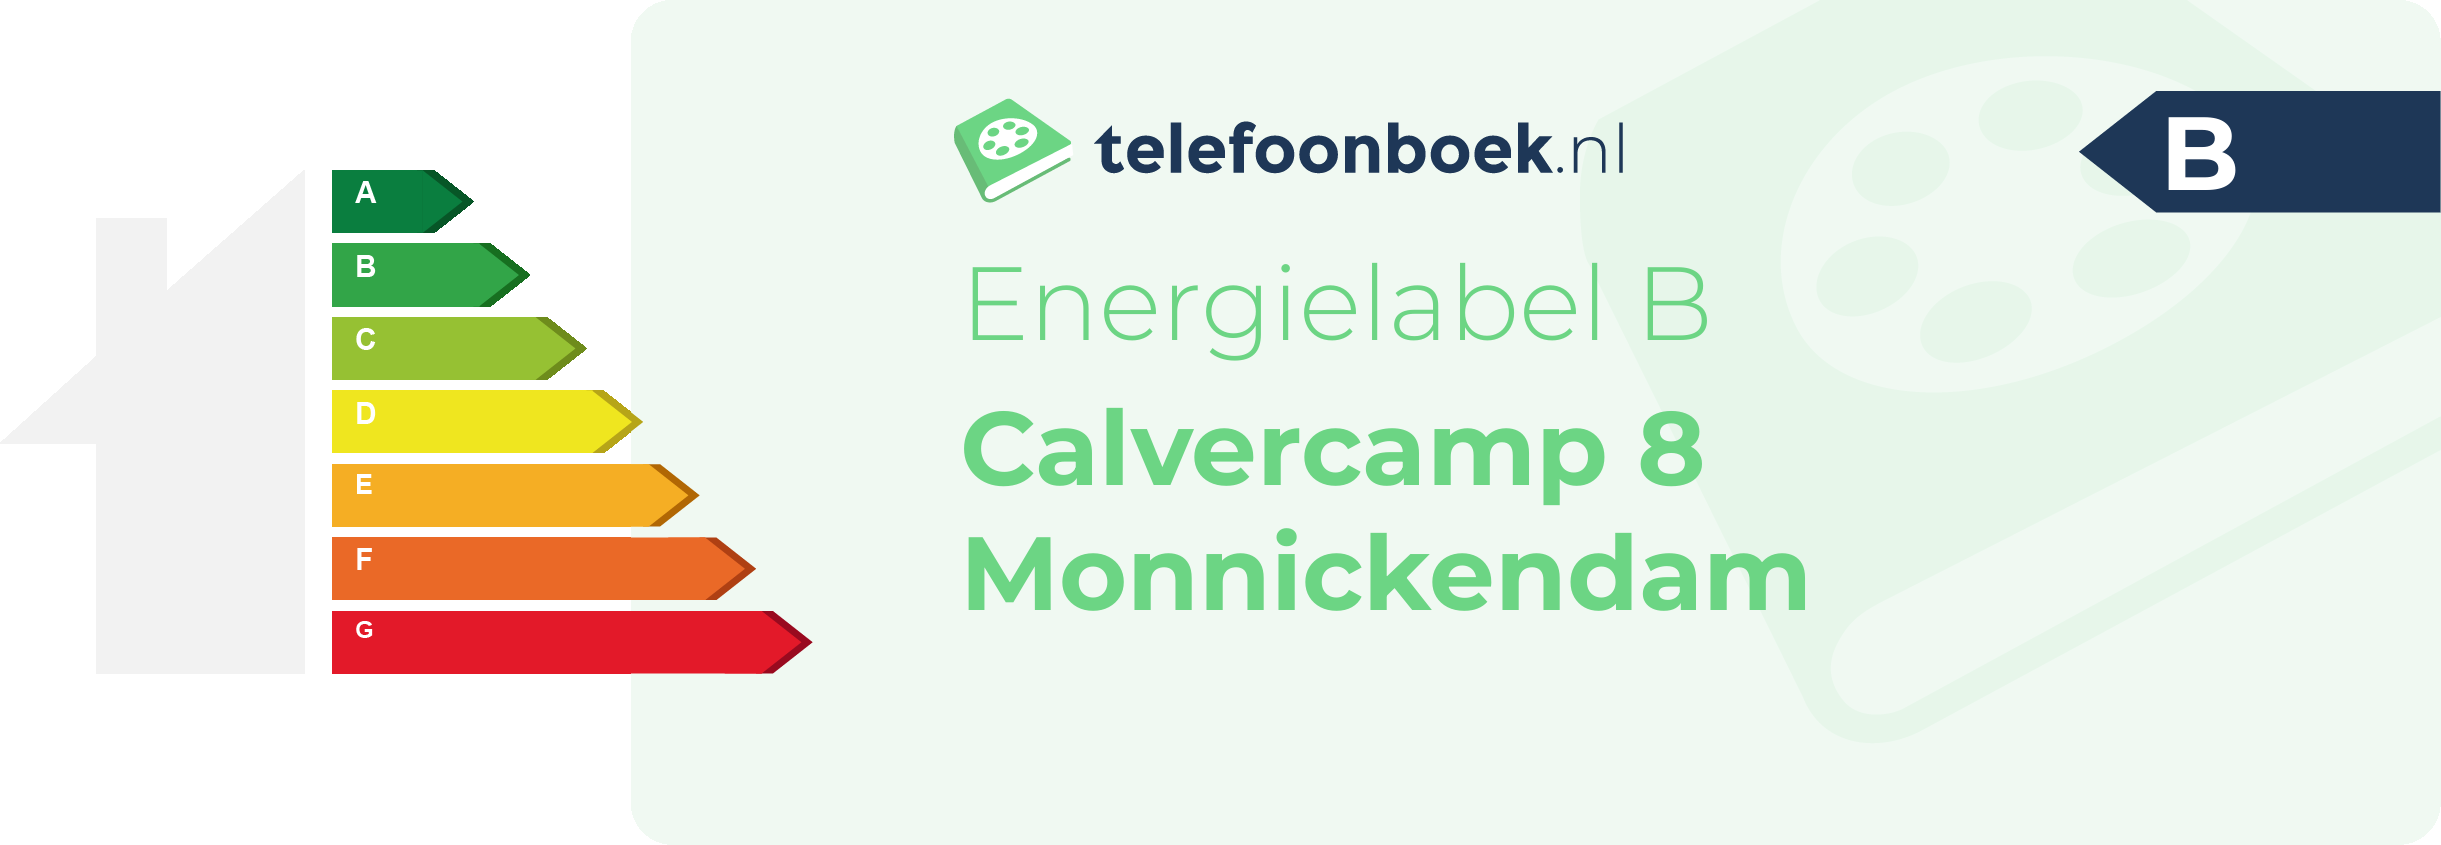 Energielabel Calvercamp 8 Monnickendam